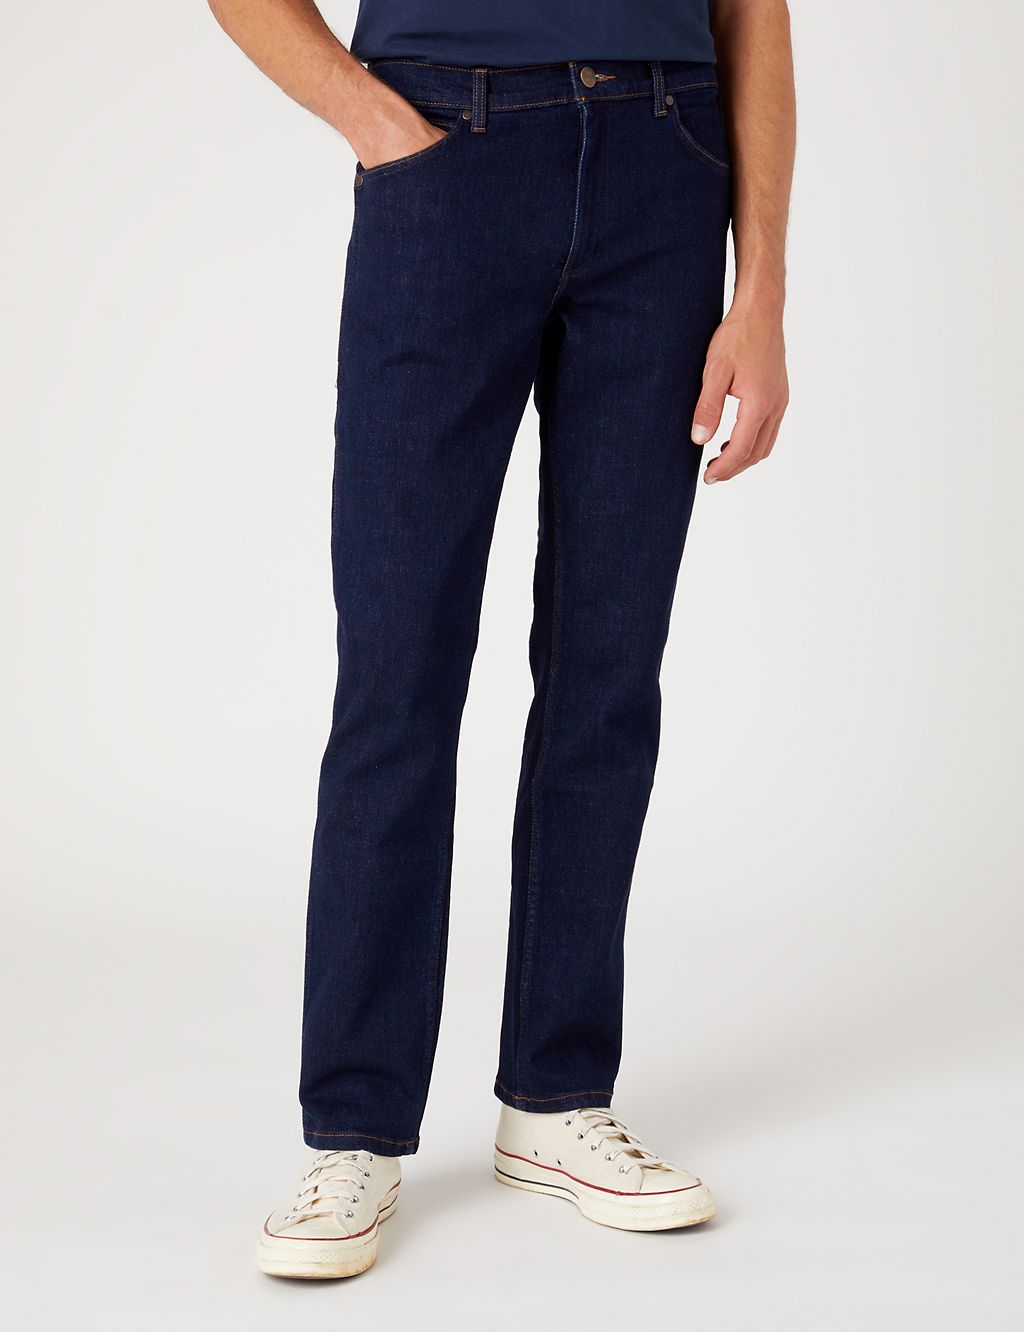 Straight Fit 5 Pocket Jeans | Wrangler | M&S